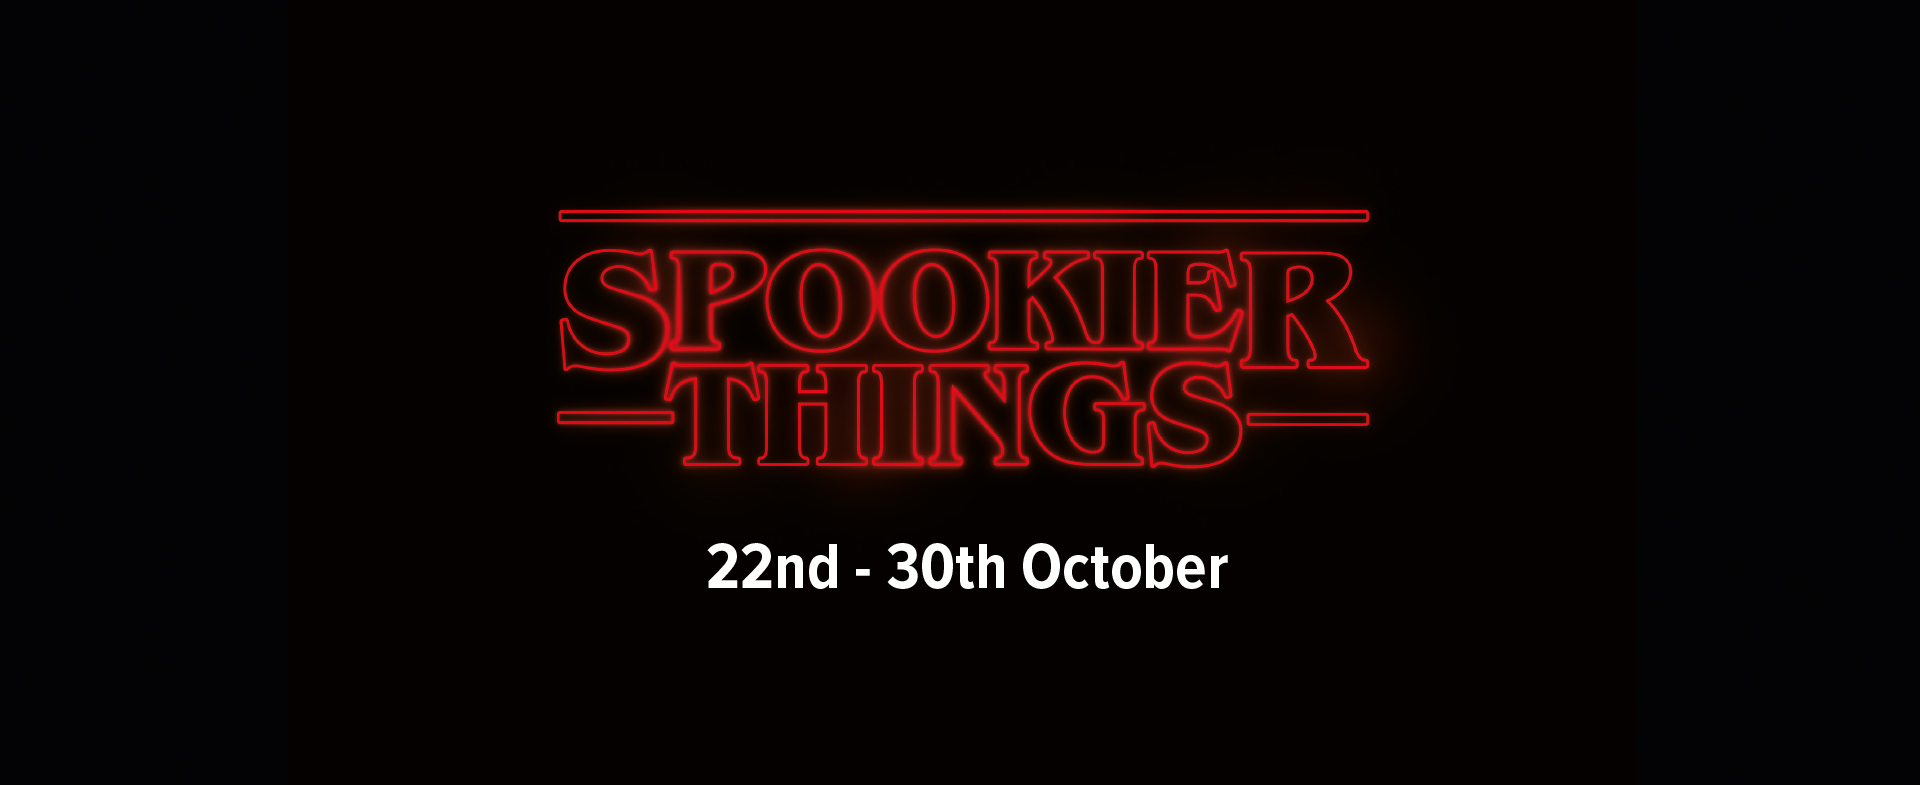 Spookier Things at Silverburn | Silverburn Shopping Centre